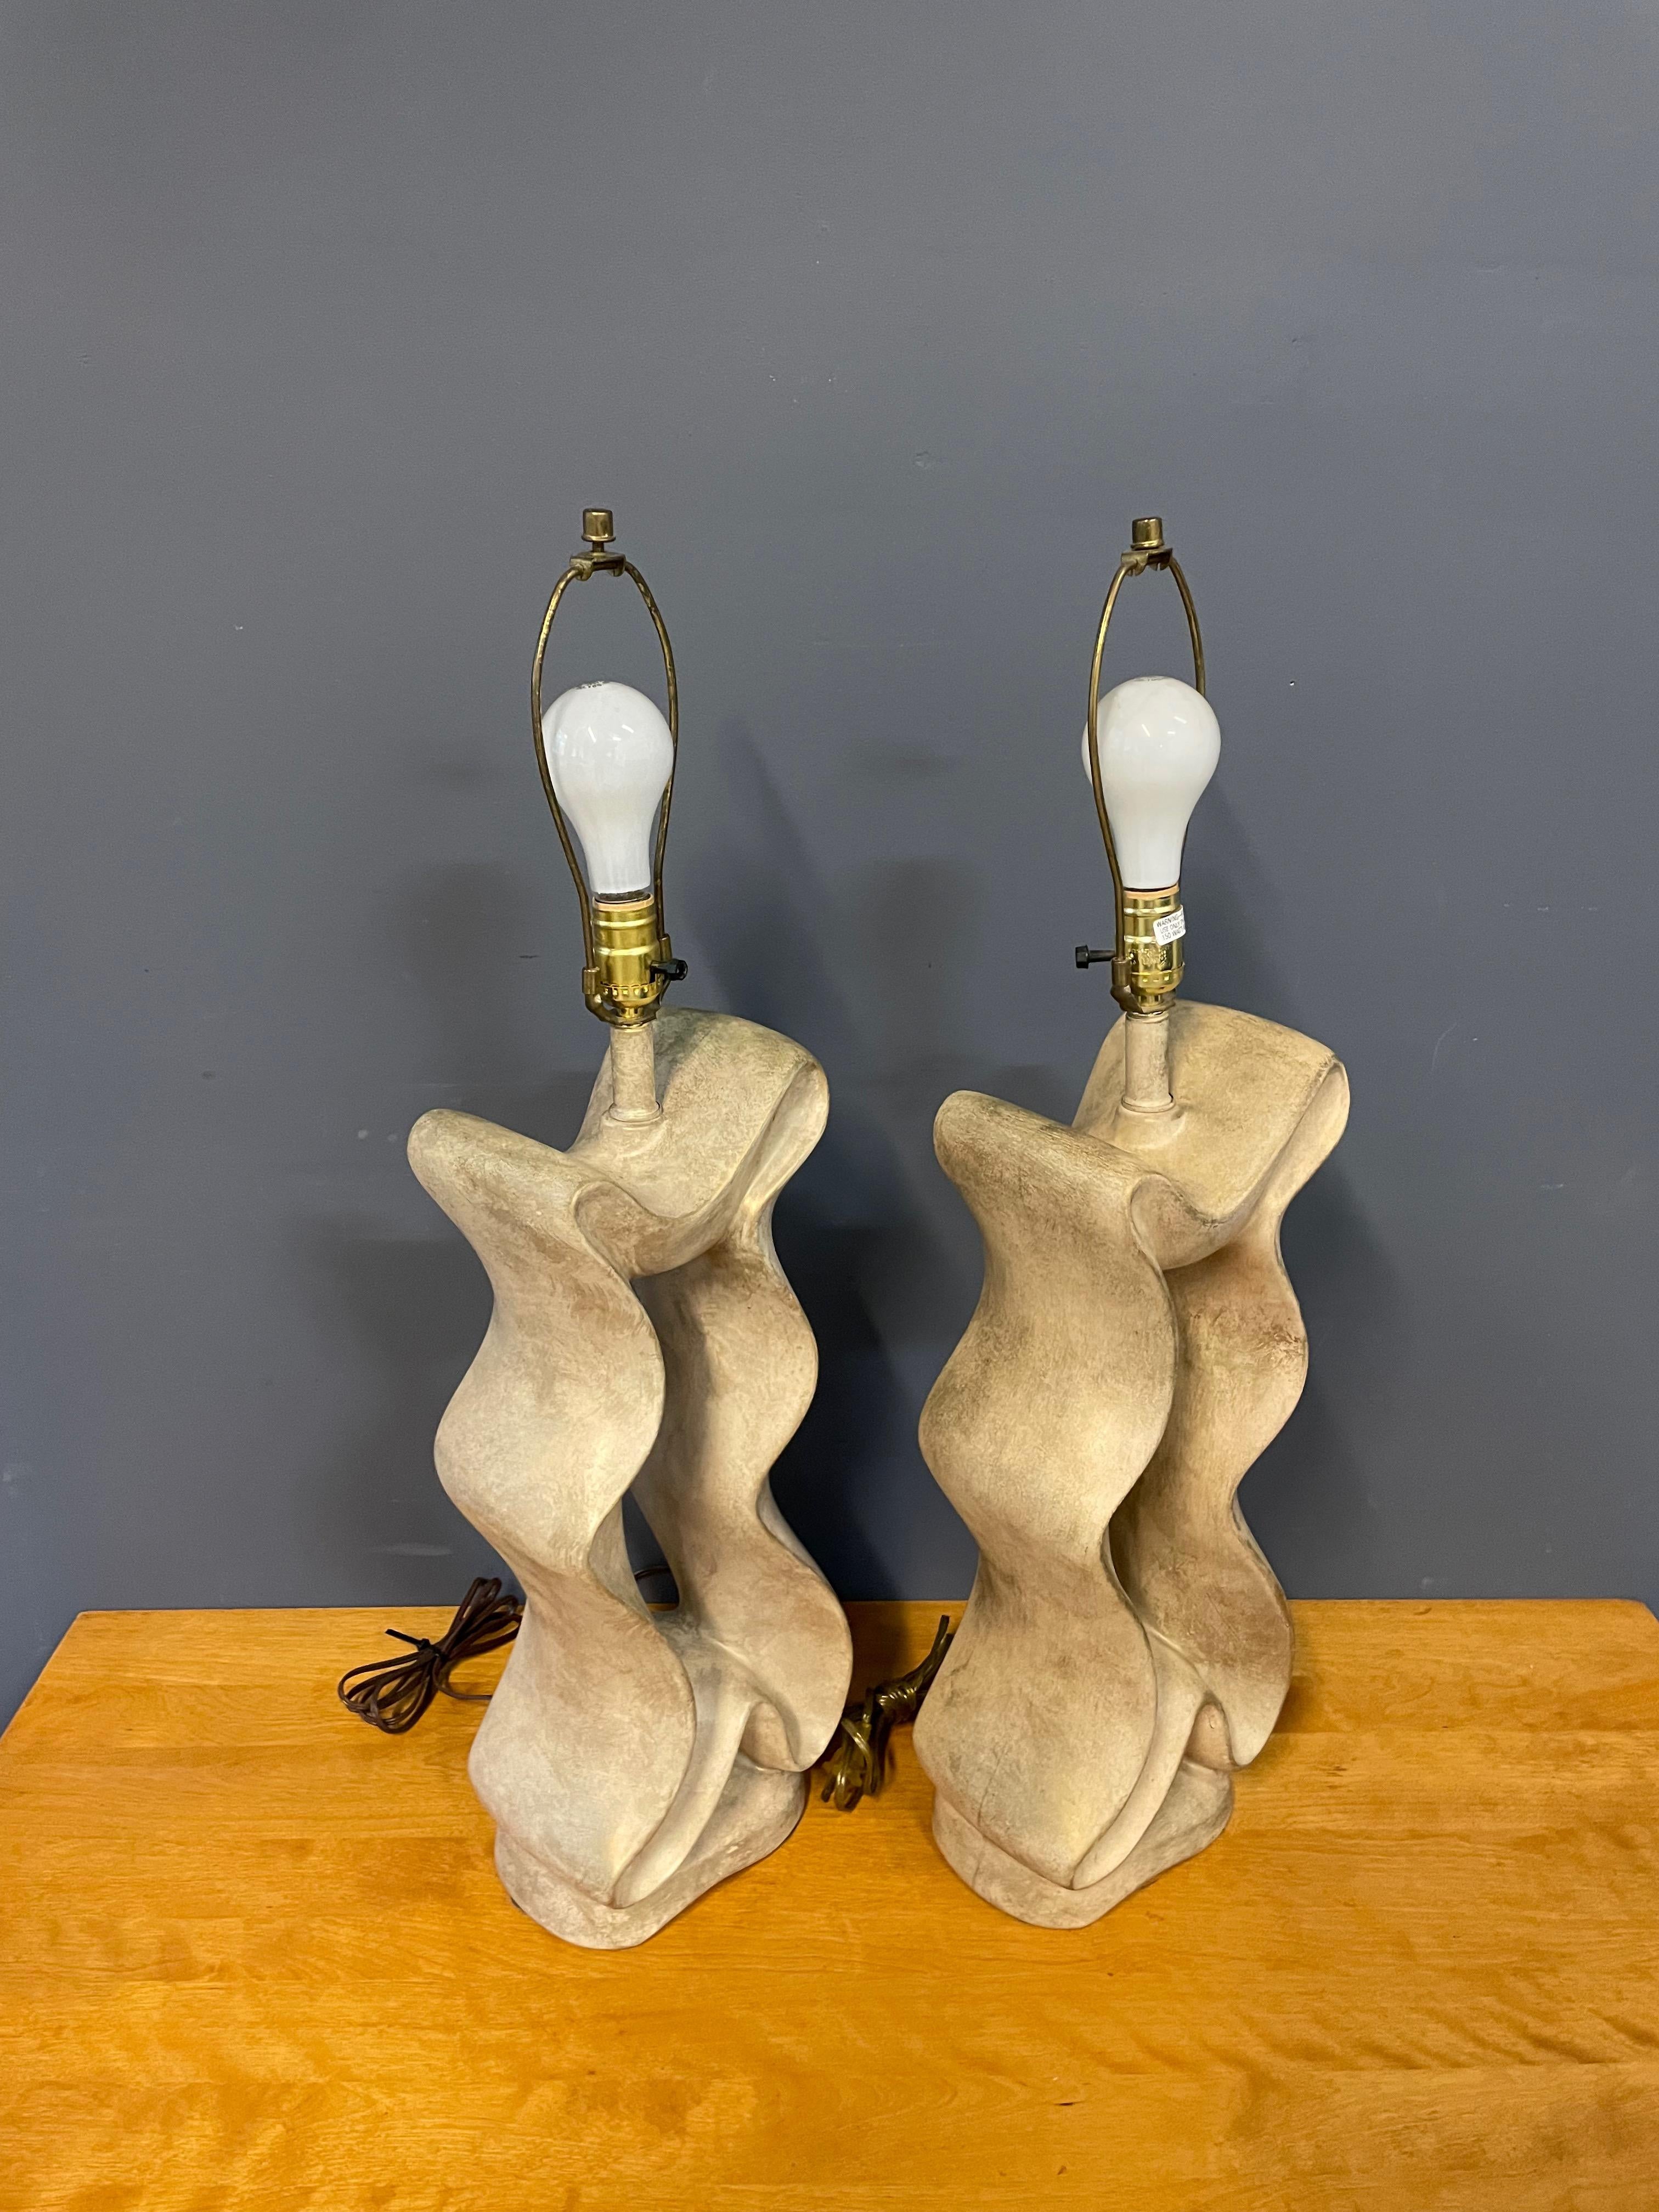 North American Pair of Biomorphic Post Modern Ribbon Form Ceramic Lamps by Jaru